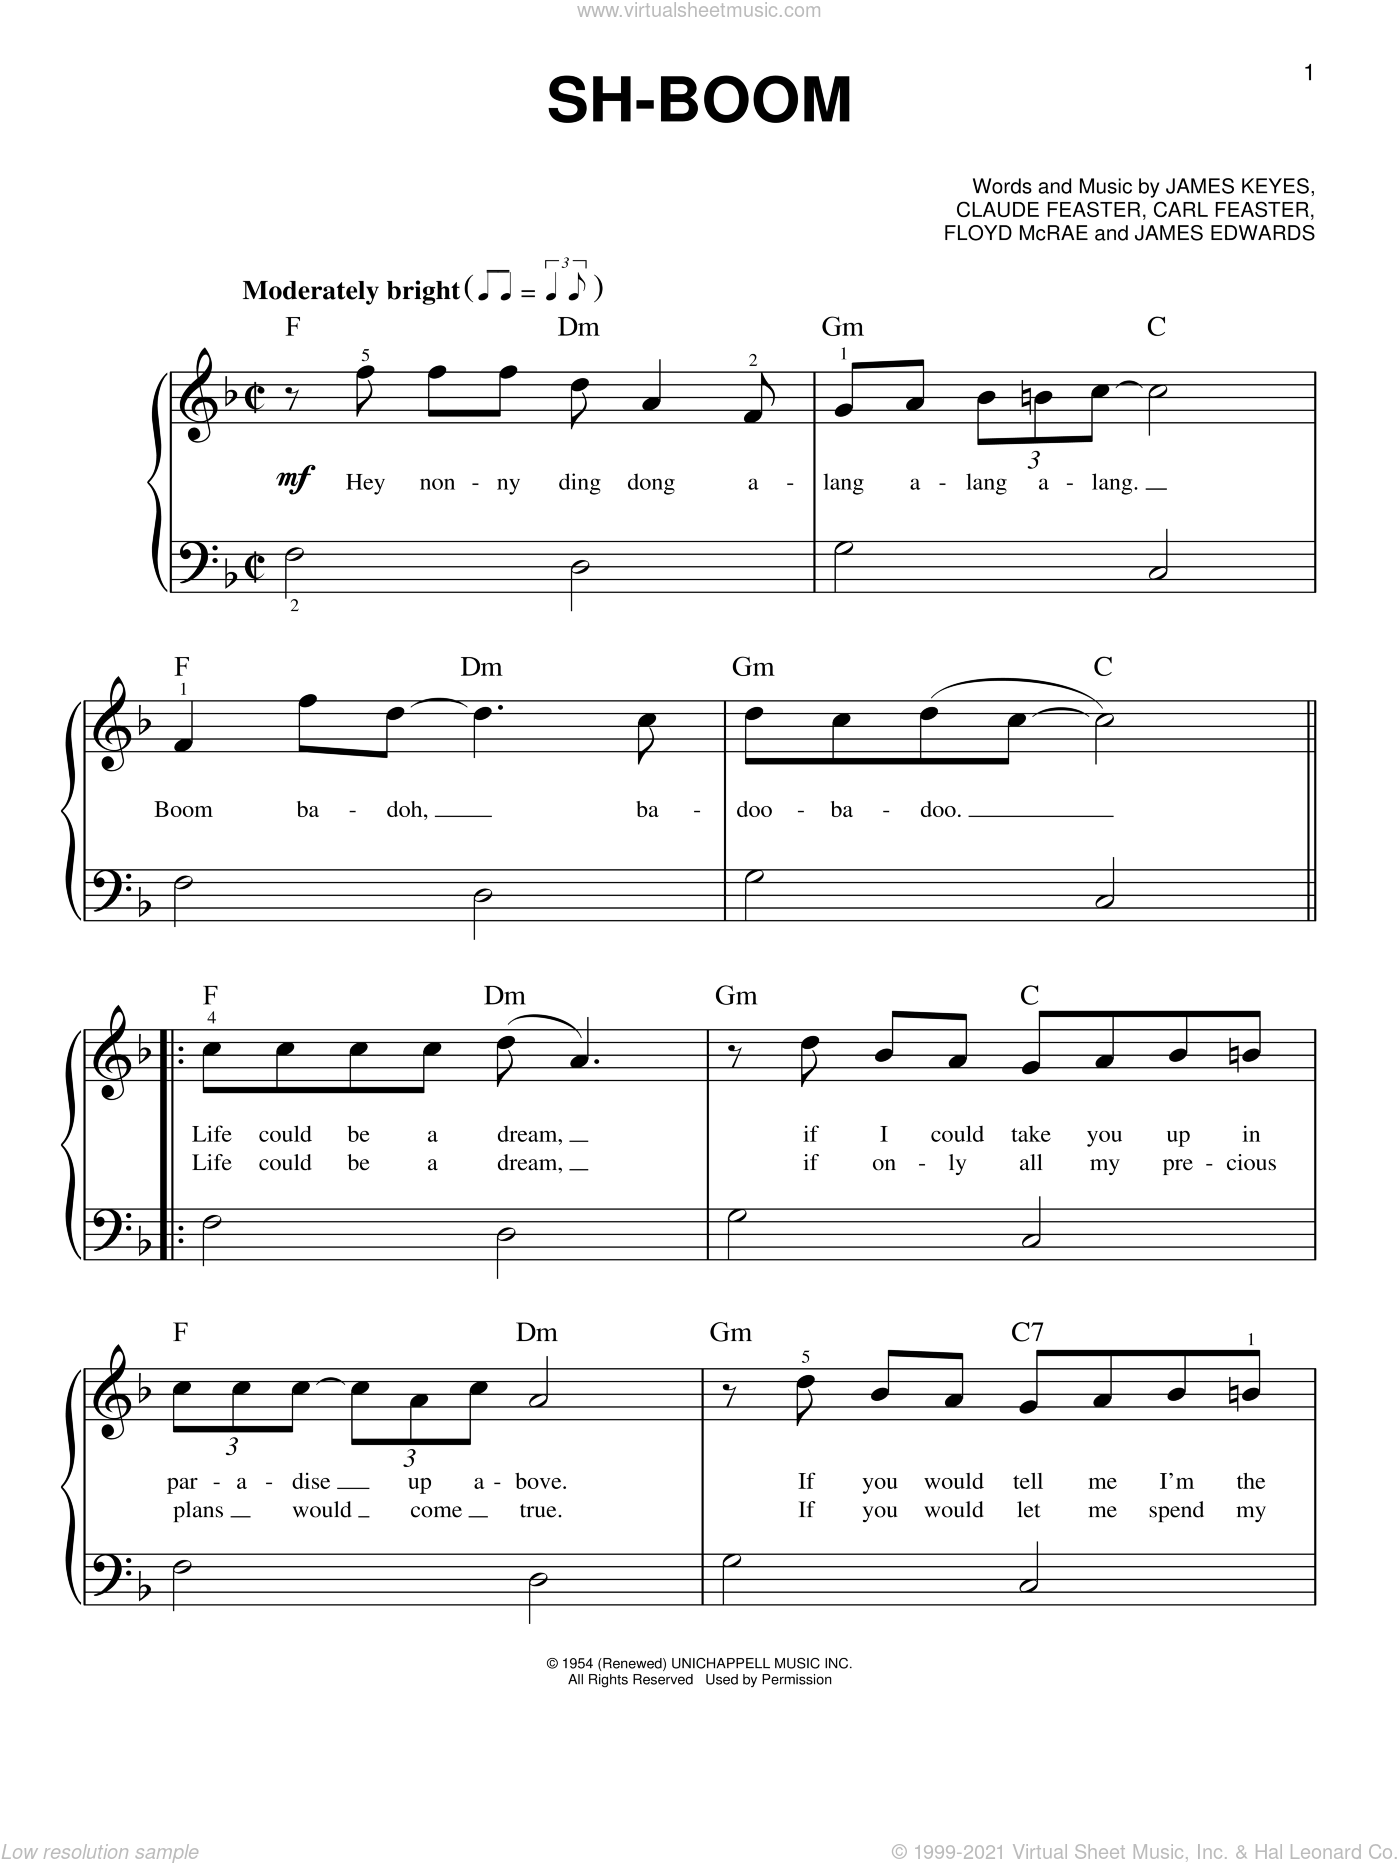 Saxaboom sheet music